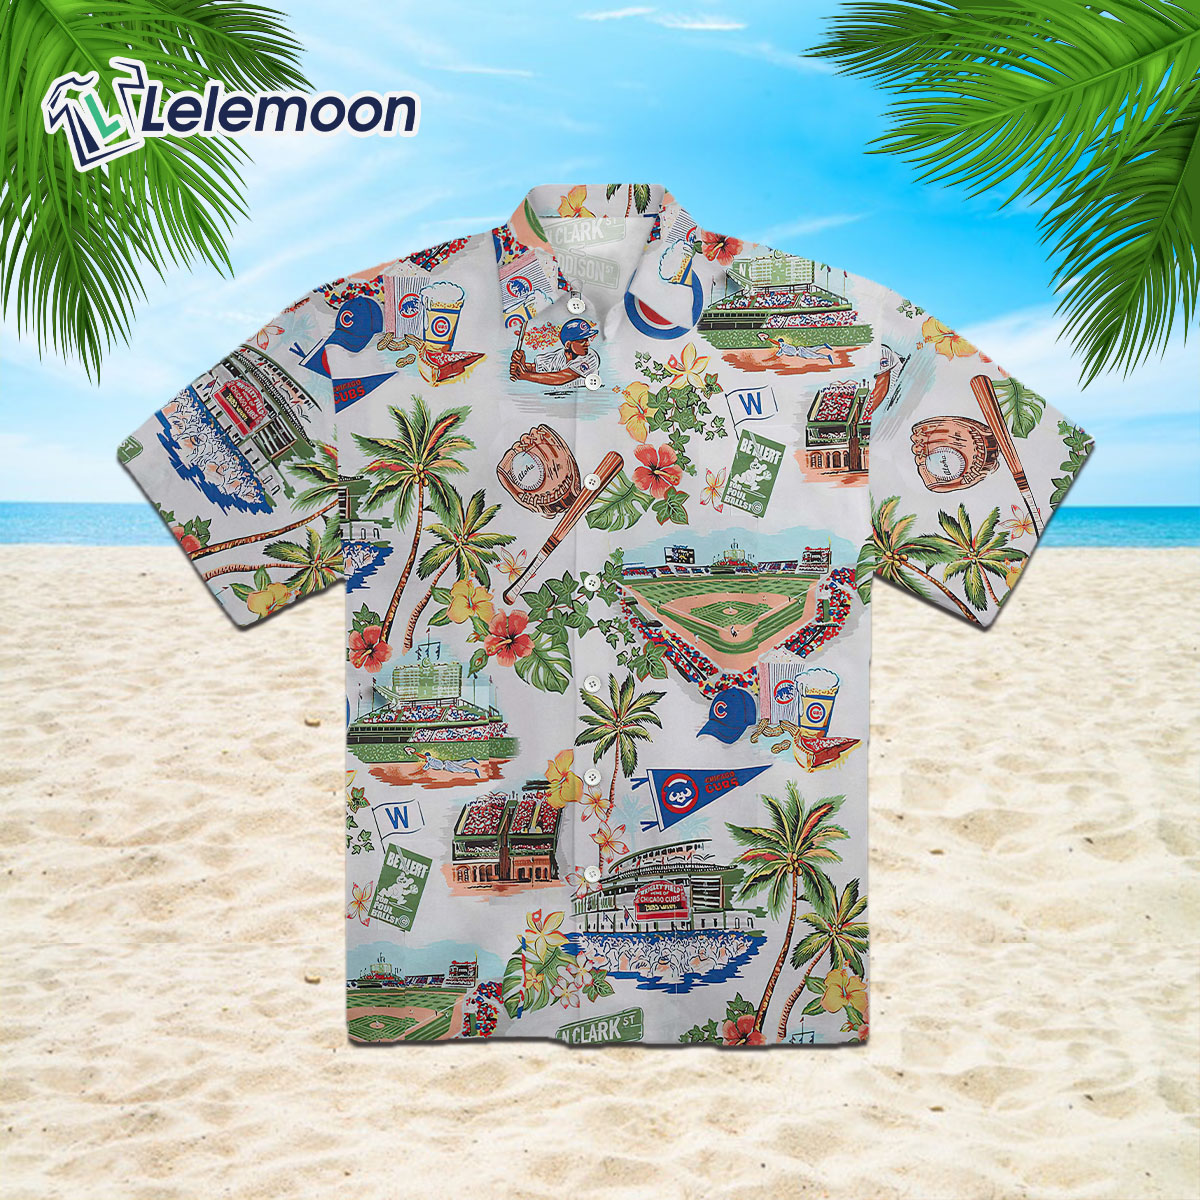 Chicago Cubs Graphic Print Hawaiian Shirt - T-shirts Low Price